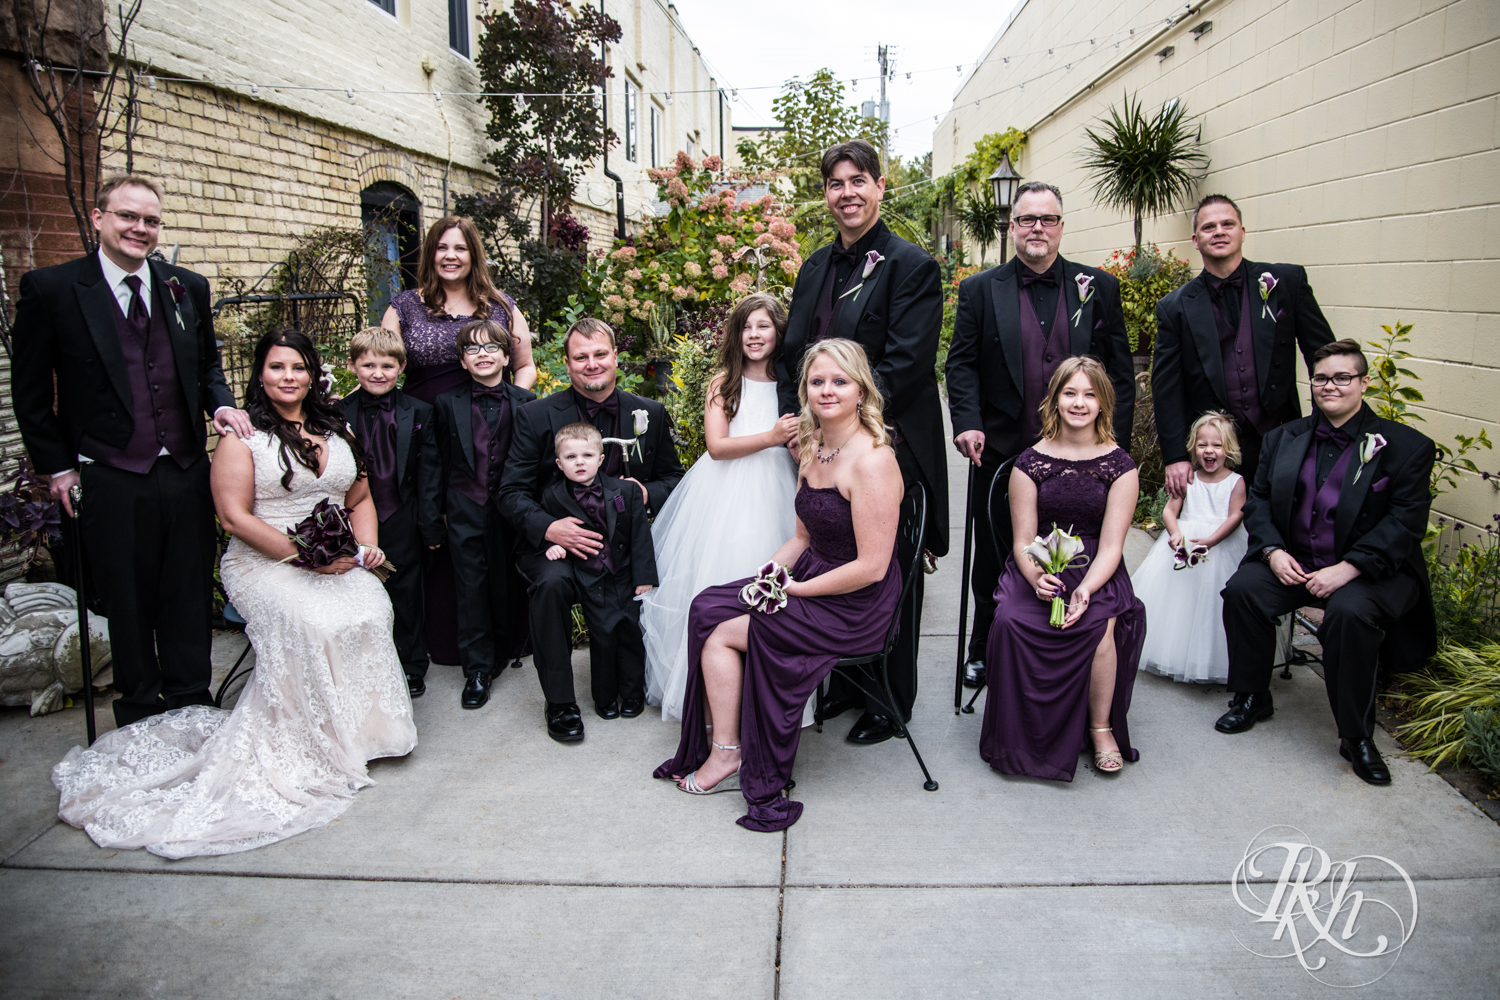 Wedding party in purple smiles at Kellerman's Event Center in White Bear Lake, Minnesota.